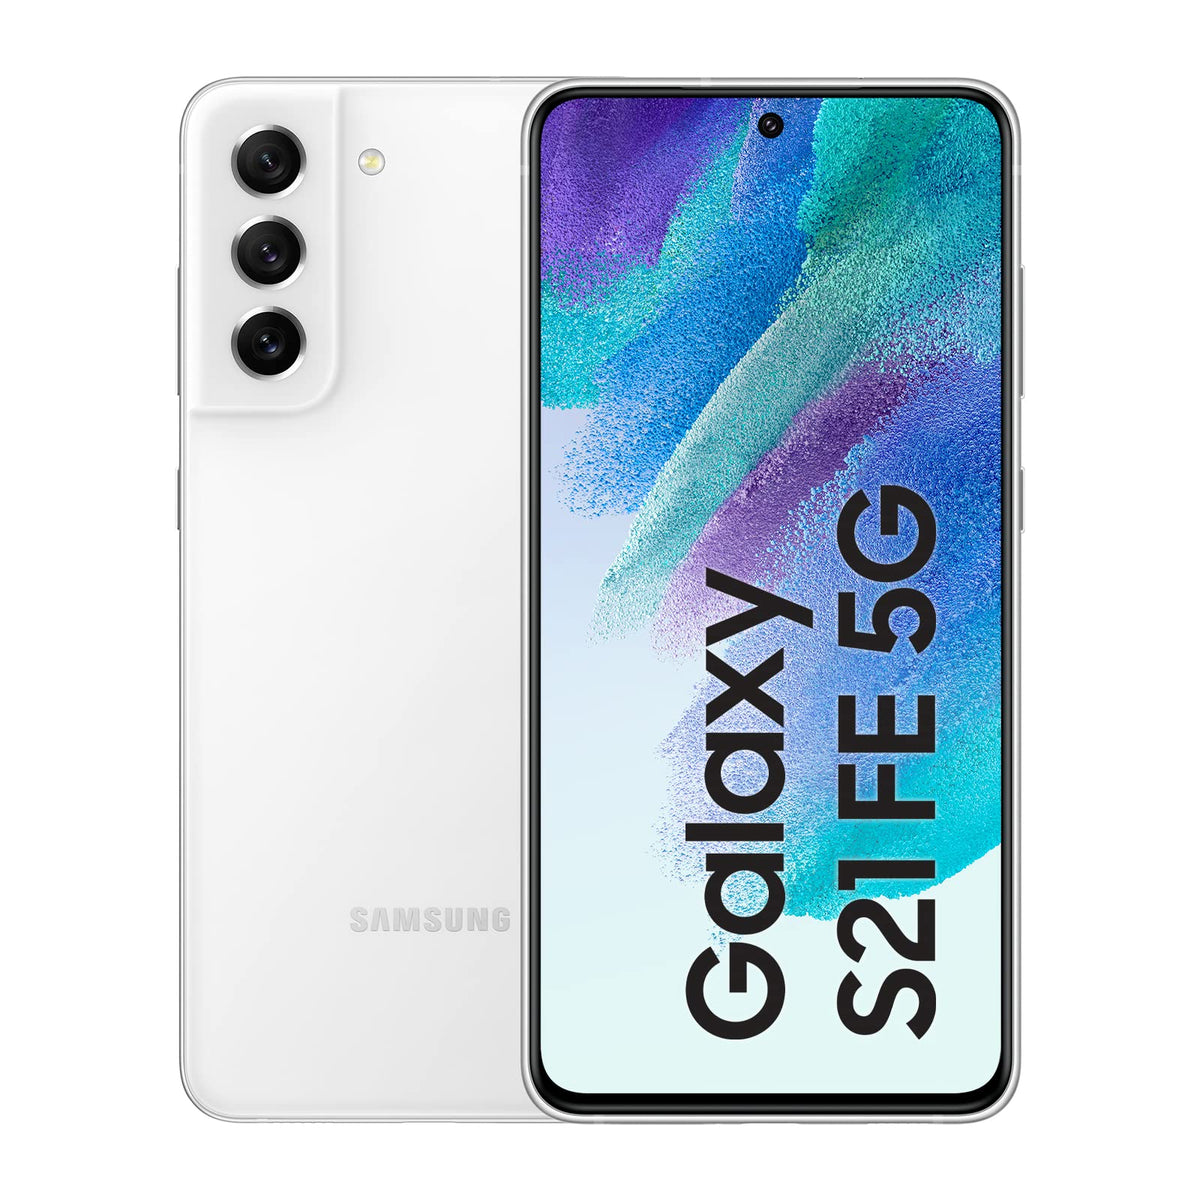 Samsung Galaxy S21 FE 5G - Good Condition